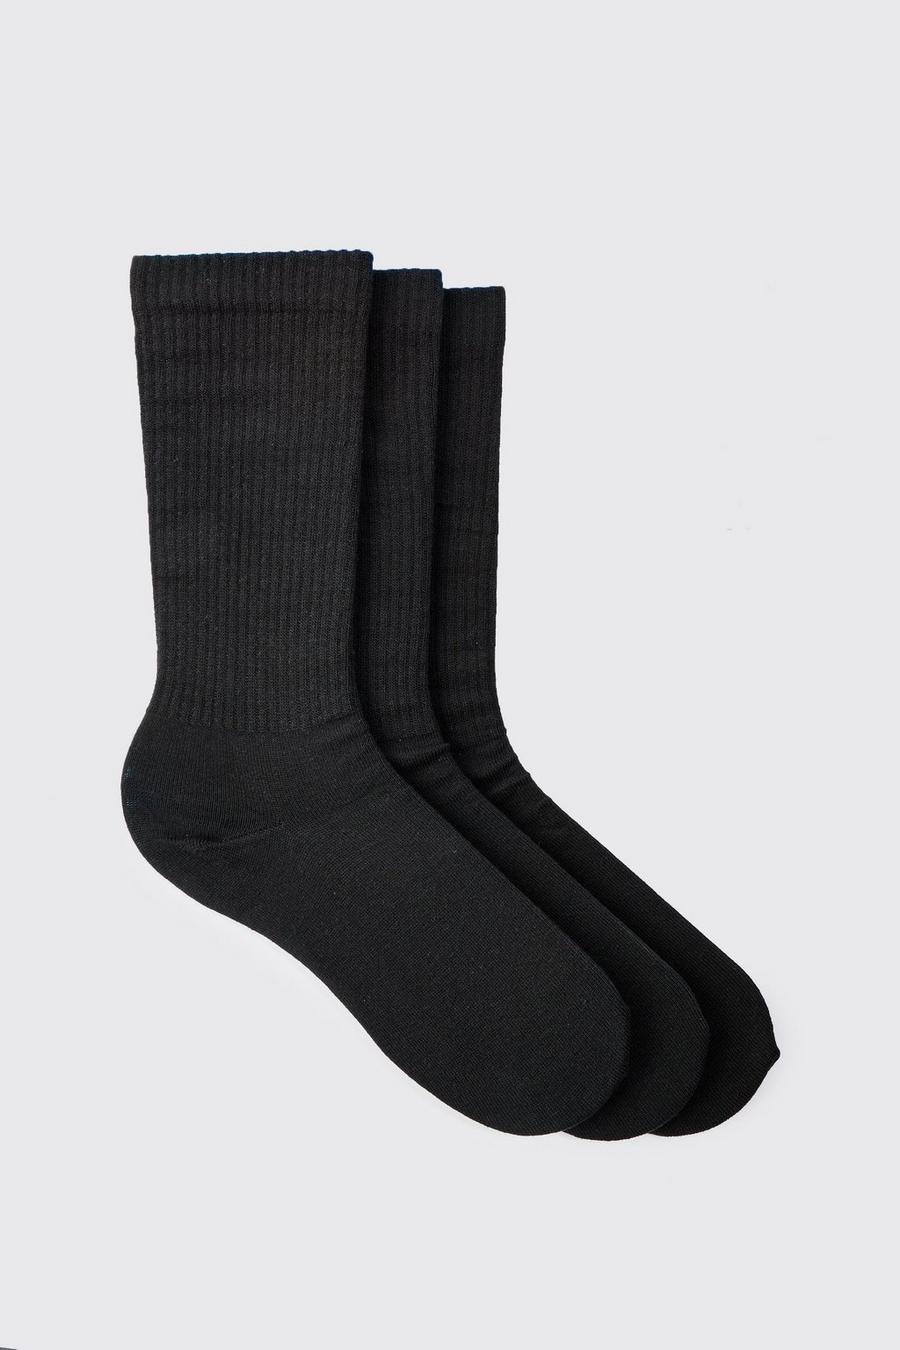 Pack de 3 pares de calcetines deportivos lisos, Black